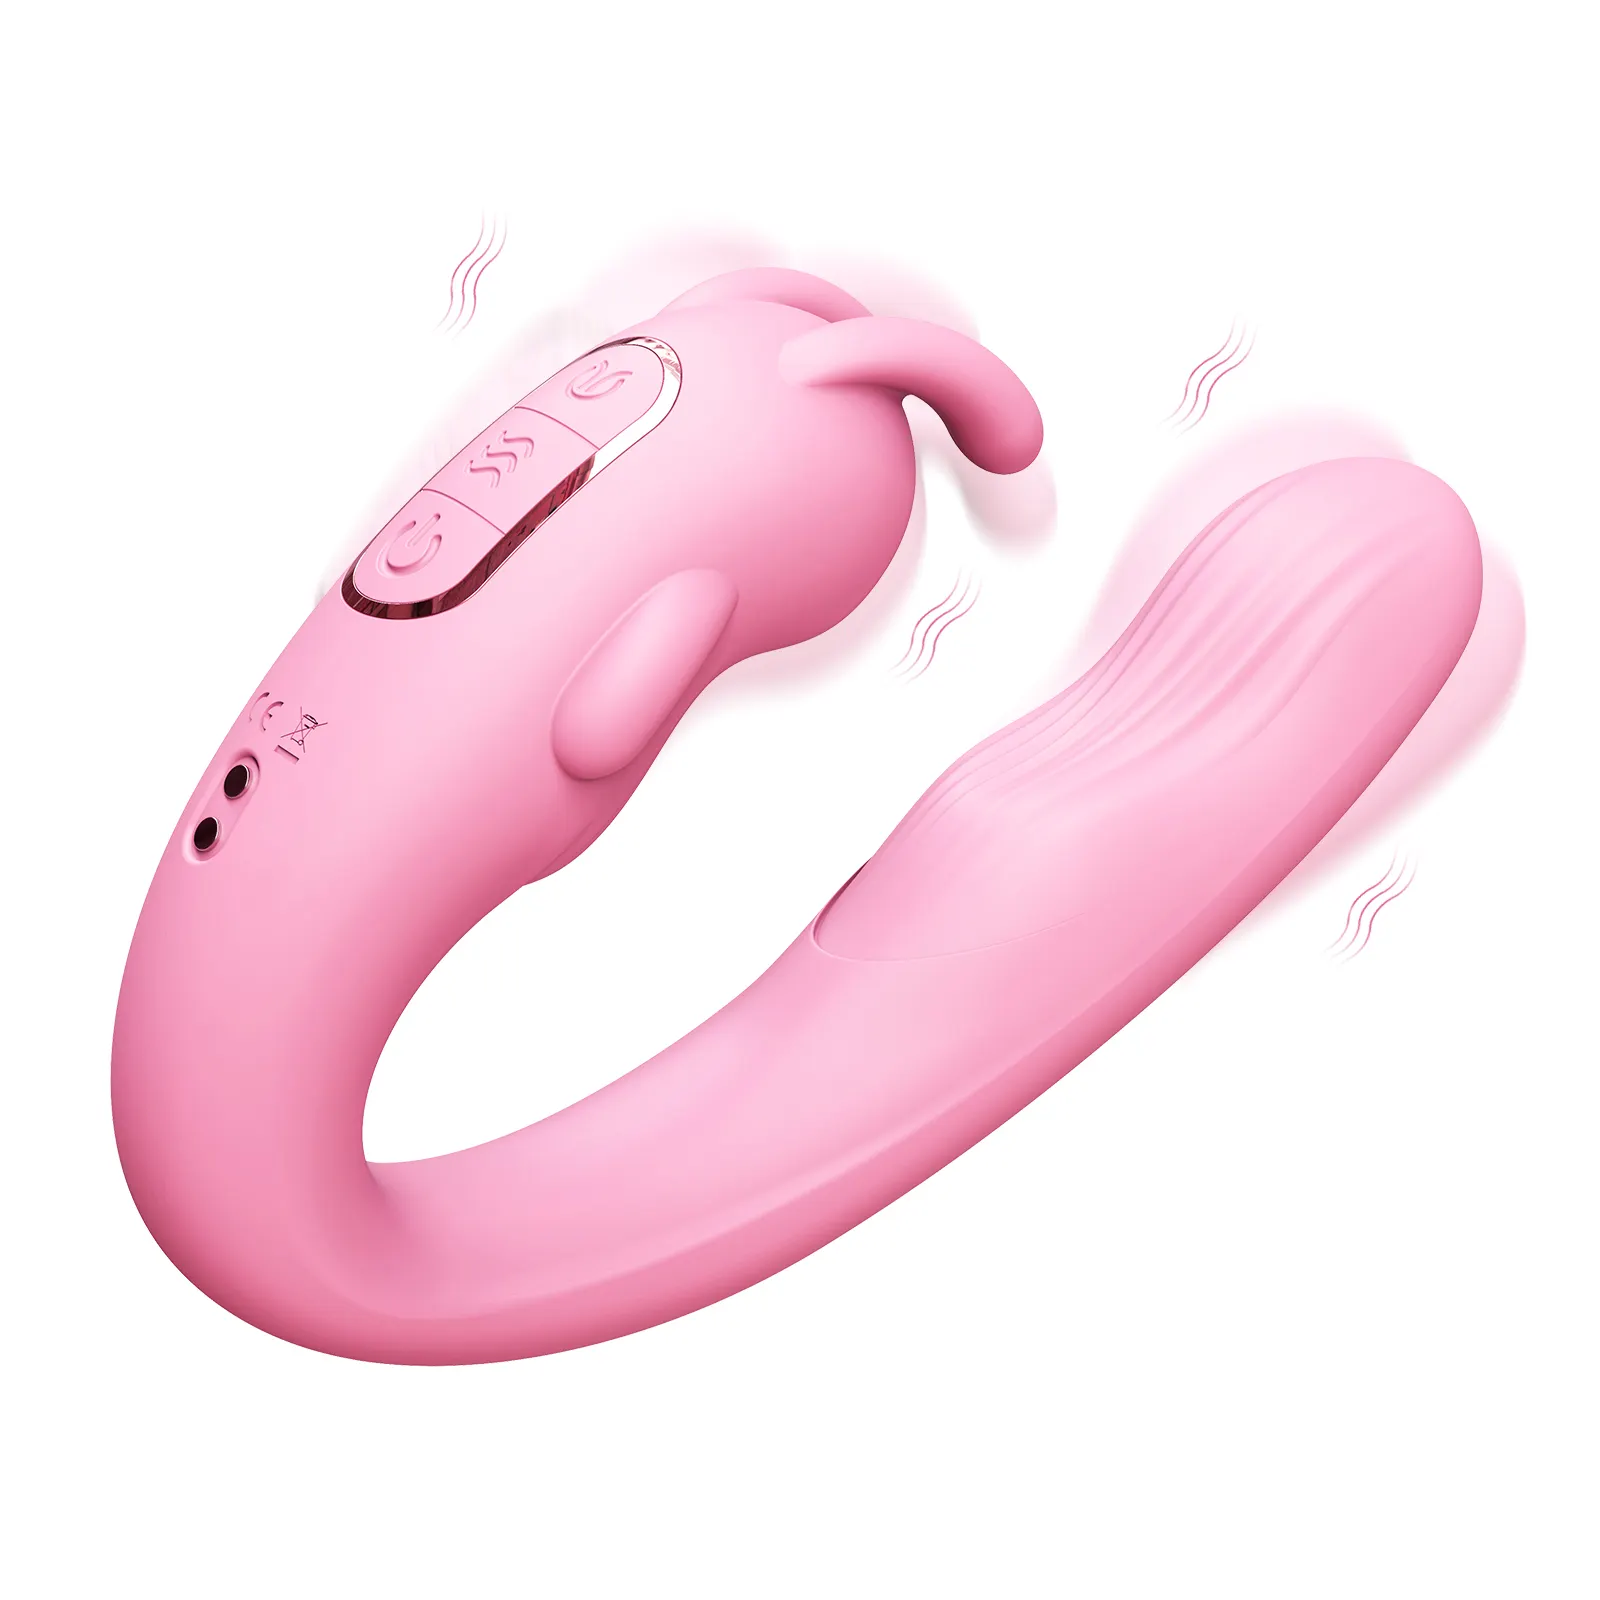 Adult Rabbit Vibrator Sex Toy For Female G Spot Stimulate Vibrator For Women Sex Toy Dildos Vibrator